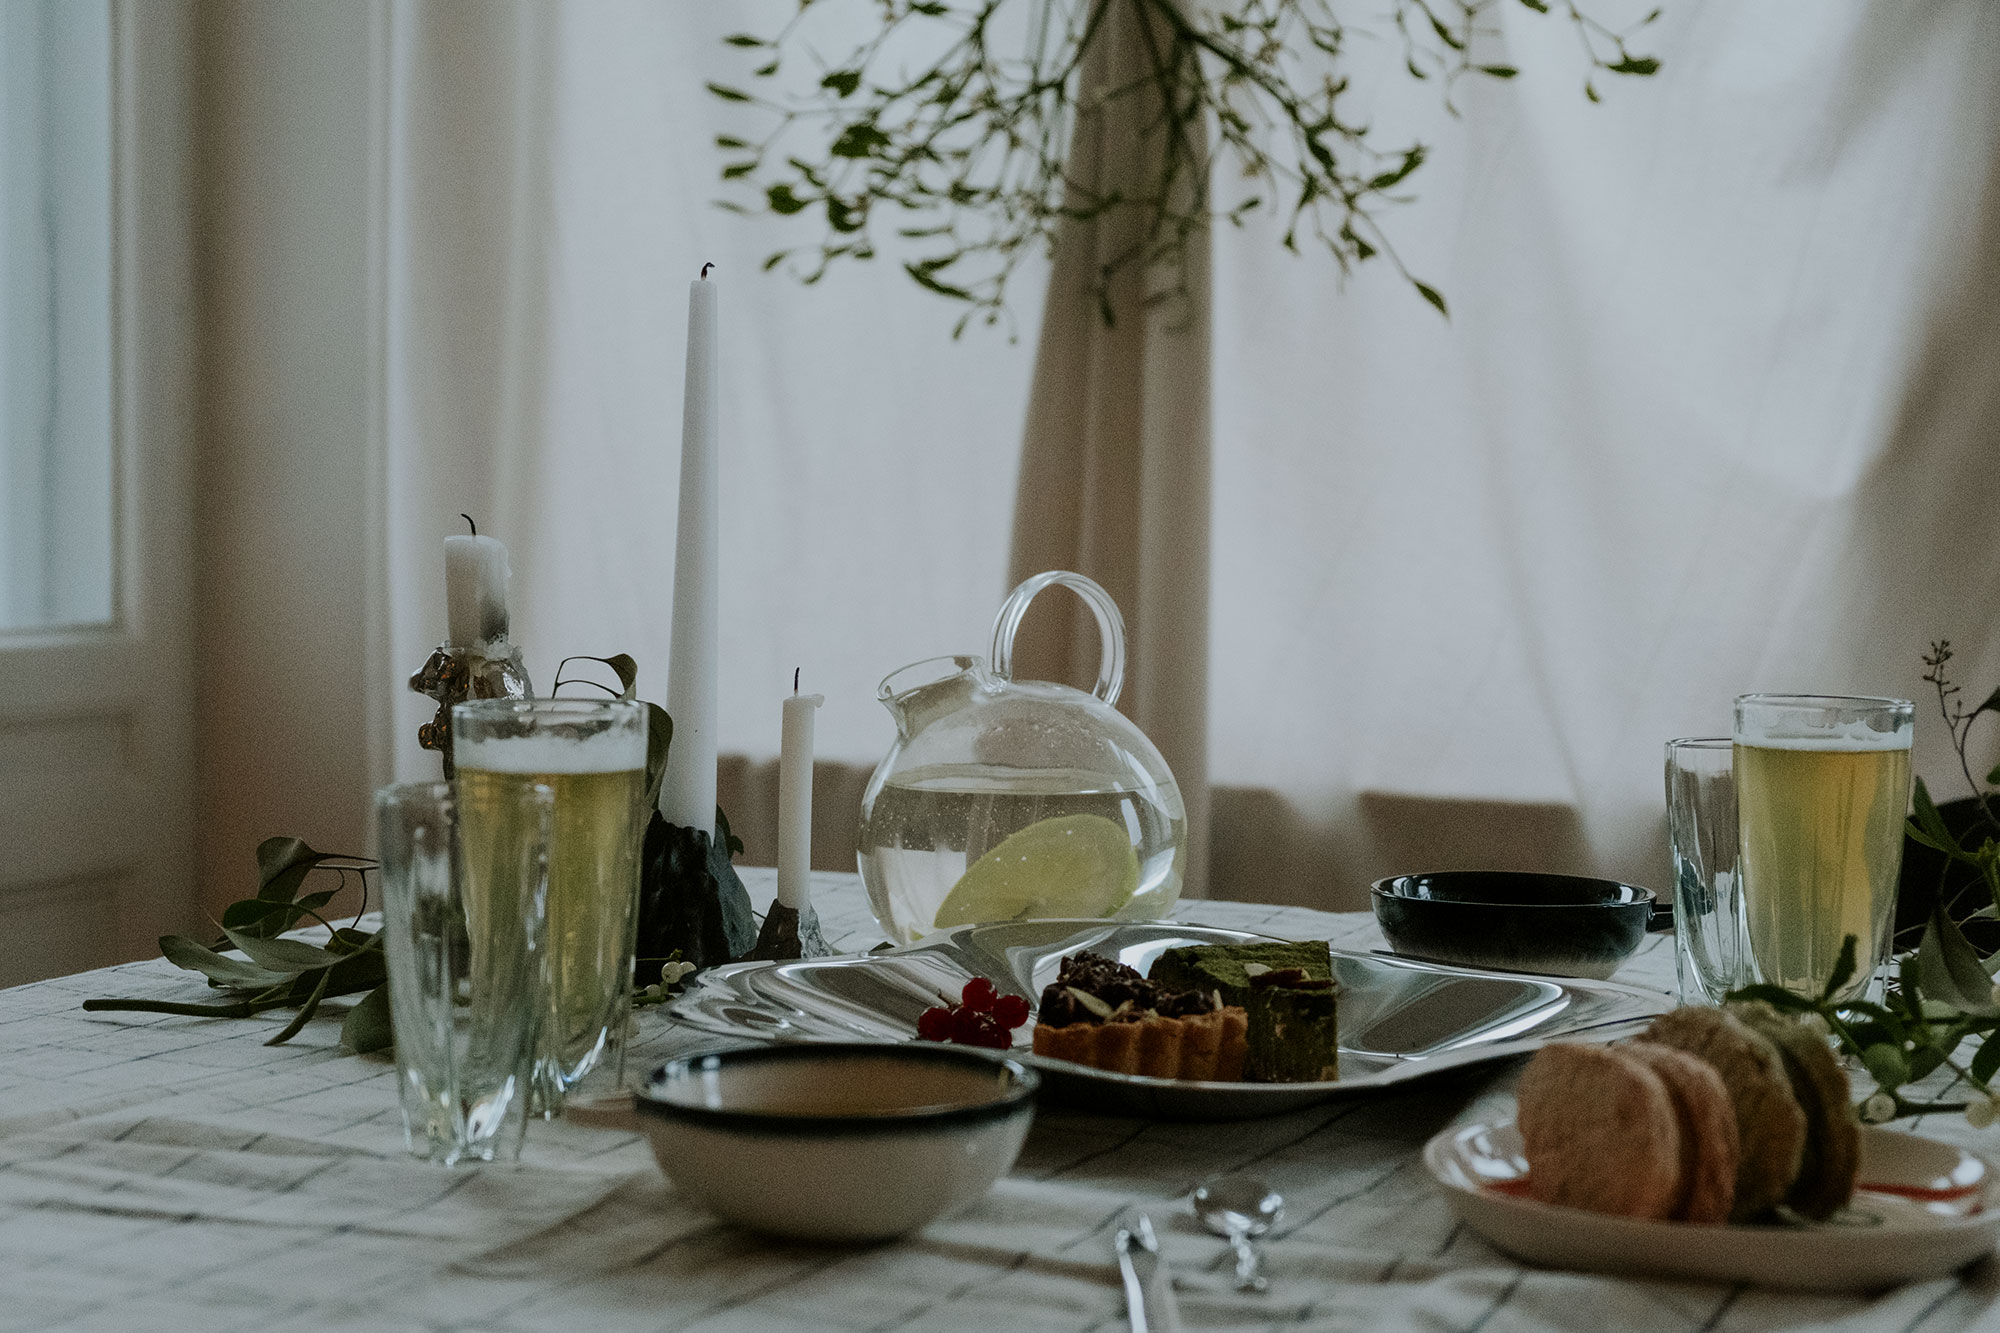 Holiday Table Setting Inspiration / Festive Season with de Bijenkorf & Iittala, Alessi & Serax – Berlin based Lifestyle, Travel & Fashionblog by Alice M. Huynh / iHeartAlice.com